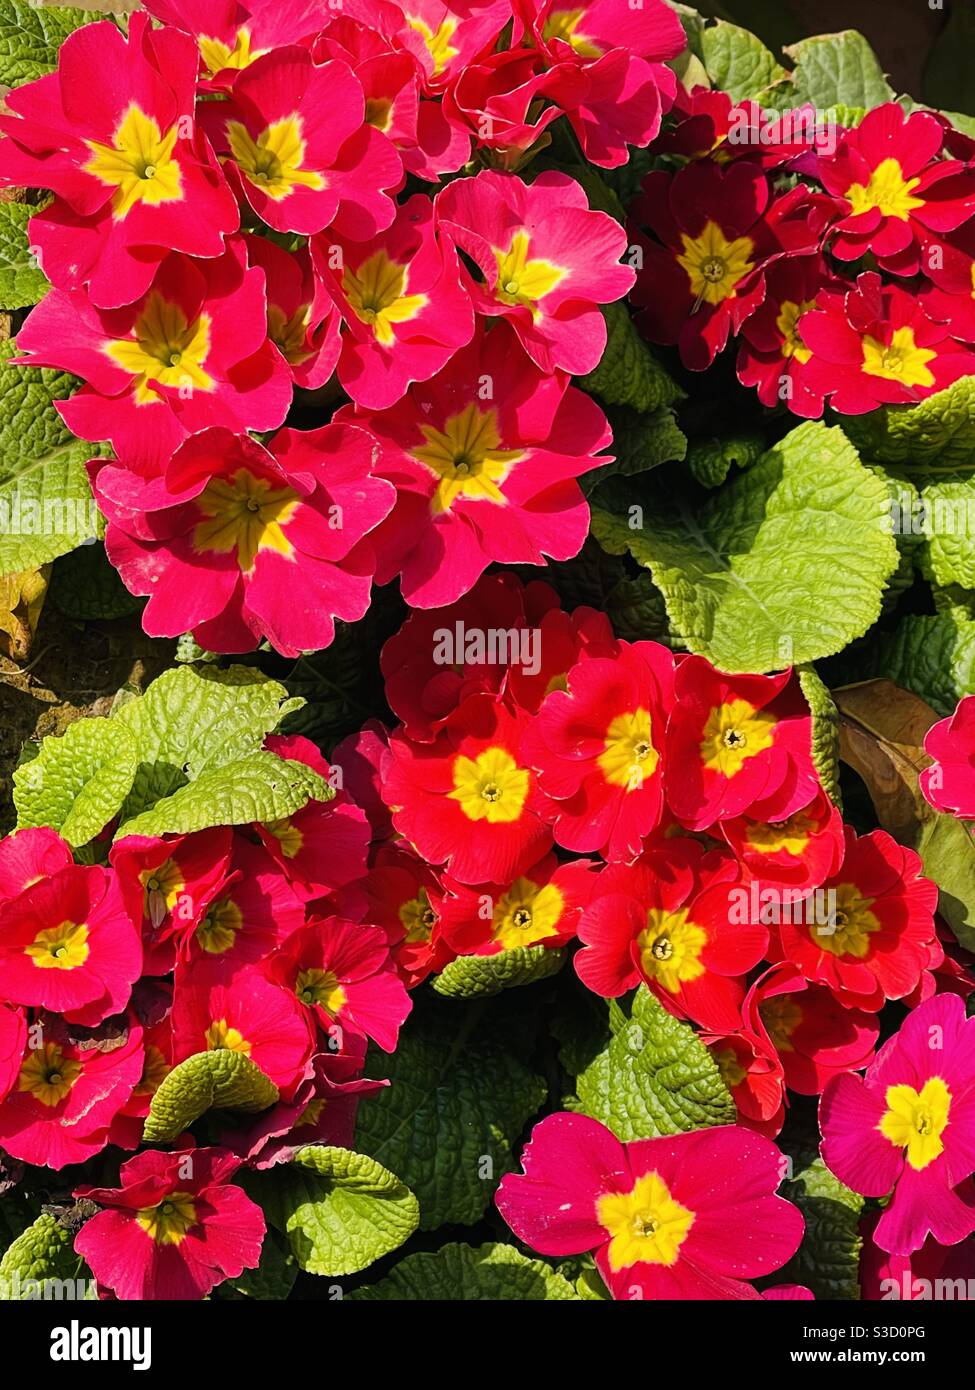 Prime rose flowers Stock Photo - Alamy